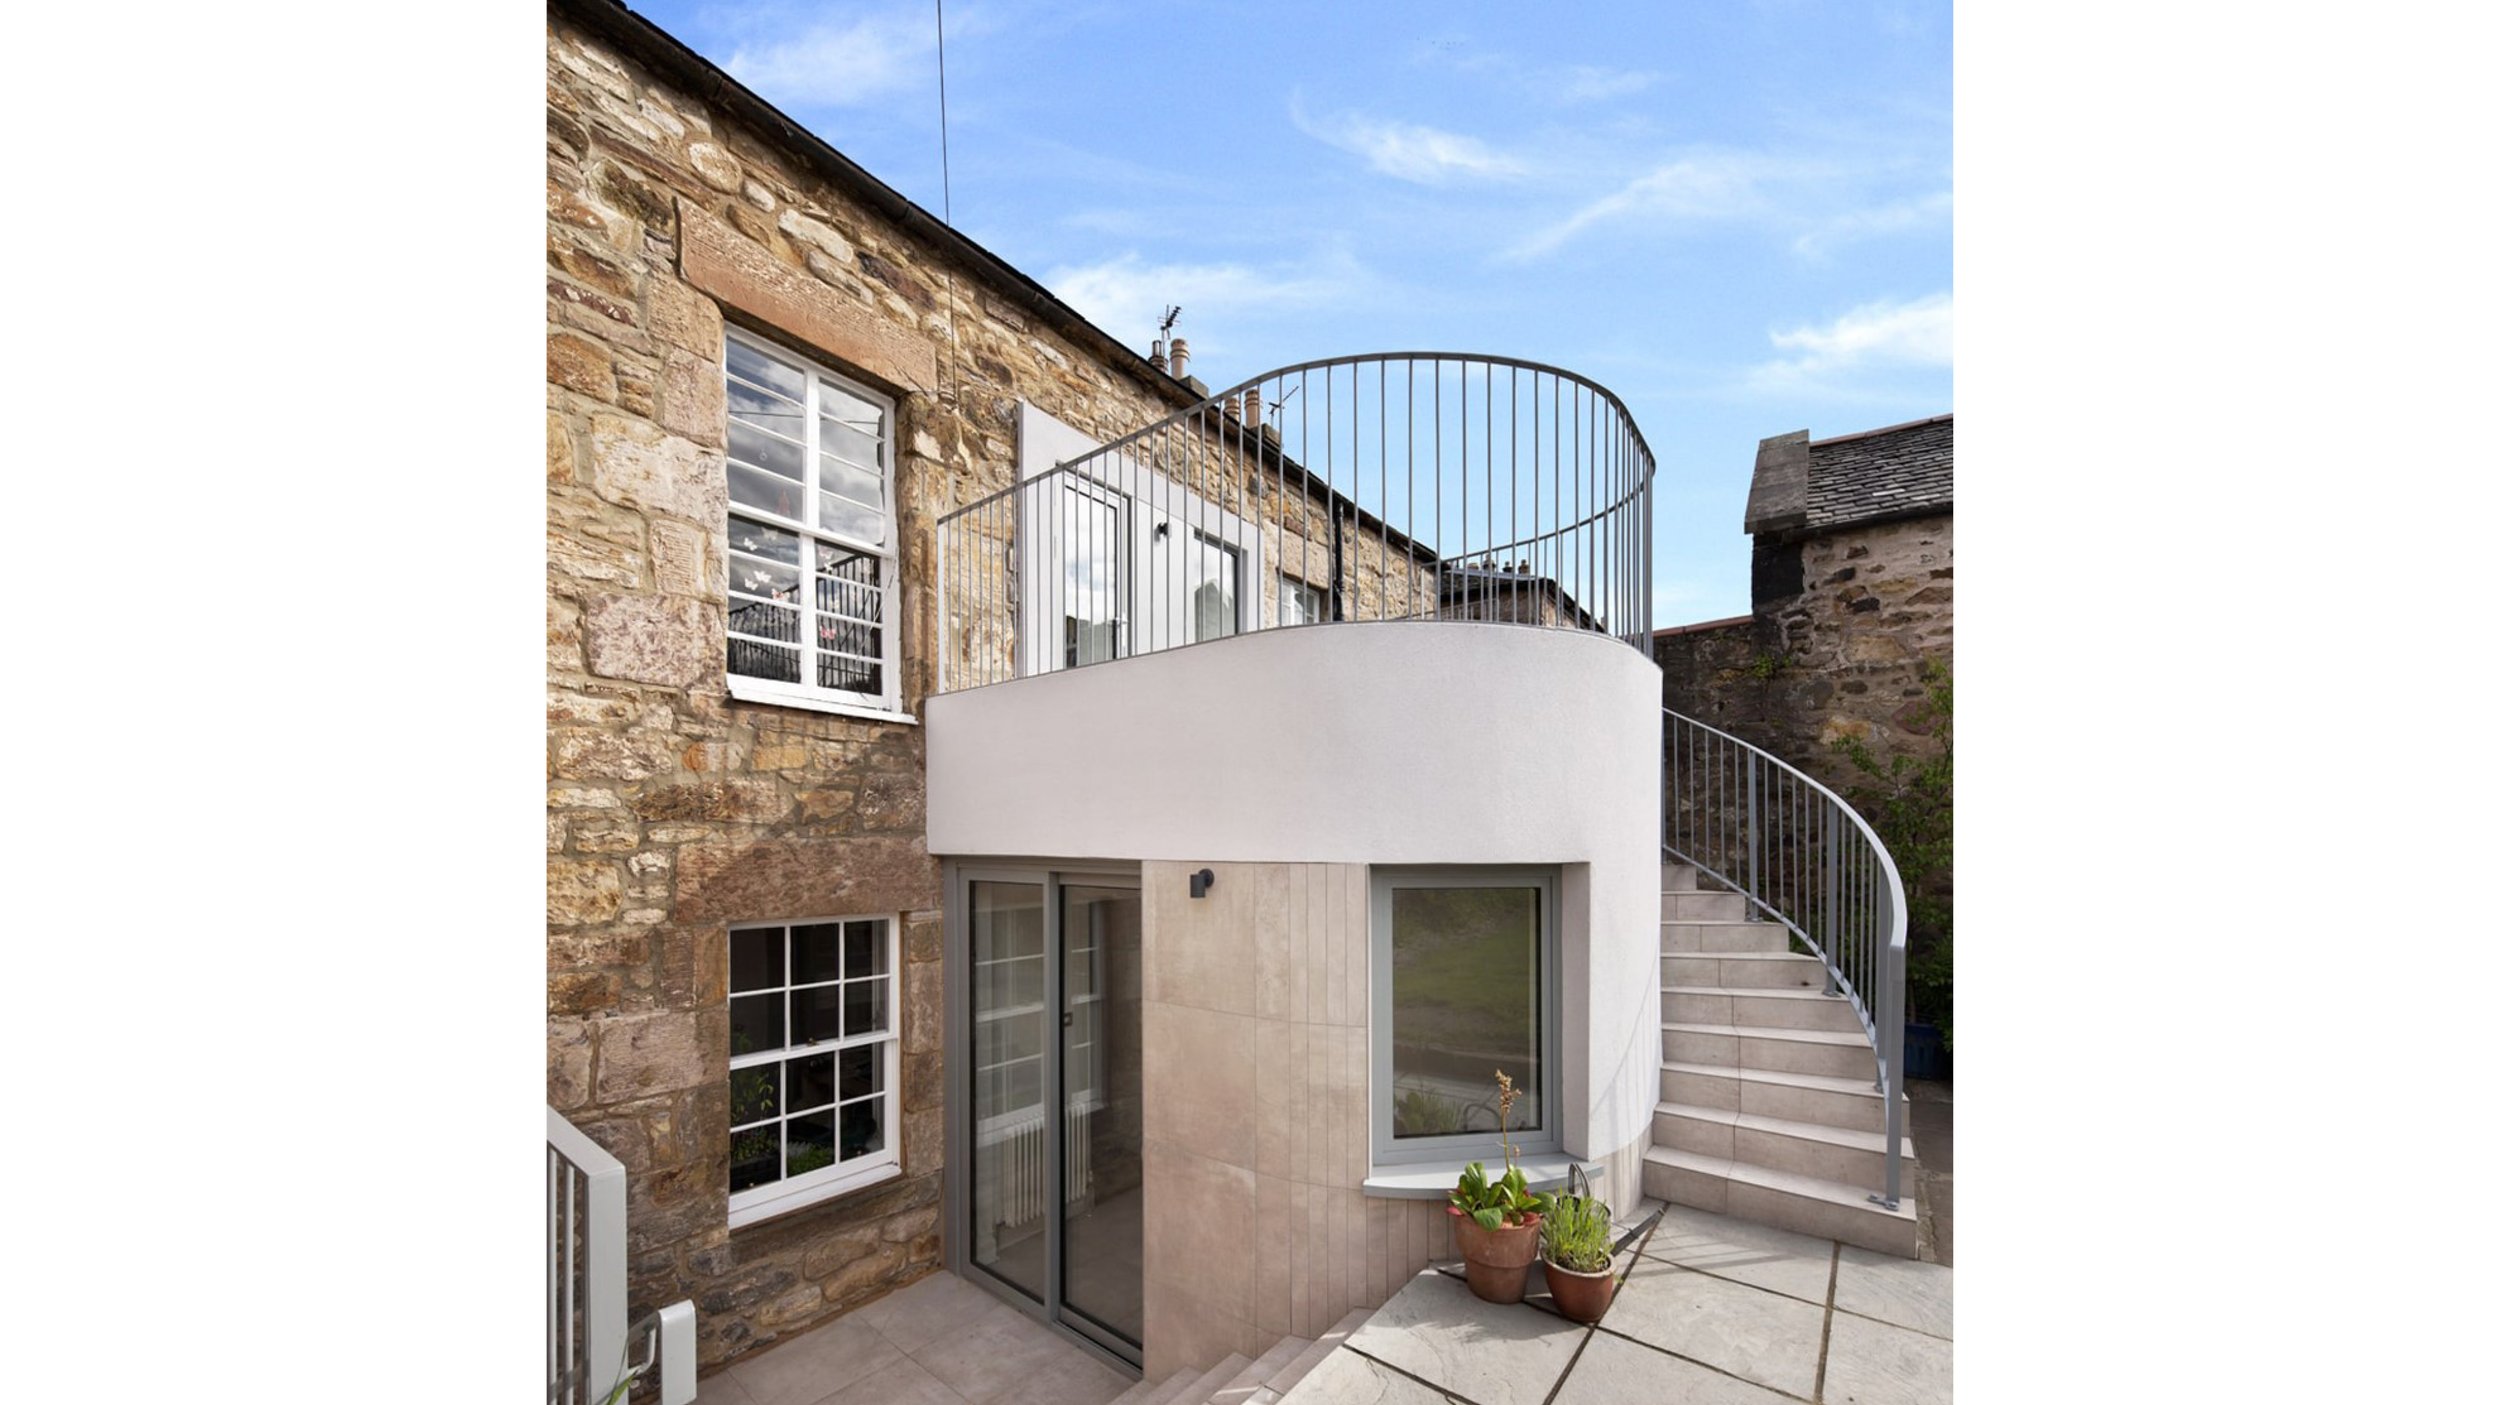 eaa-edinburgh-architectural-association-scotland-uk-awards-2022-winners-small-project-9.jpg